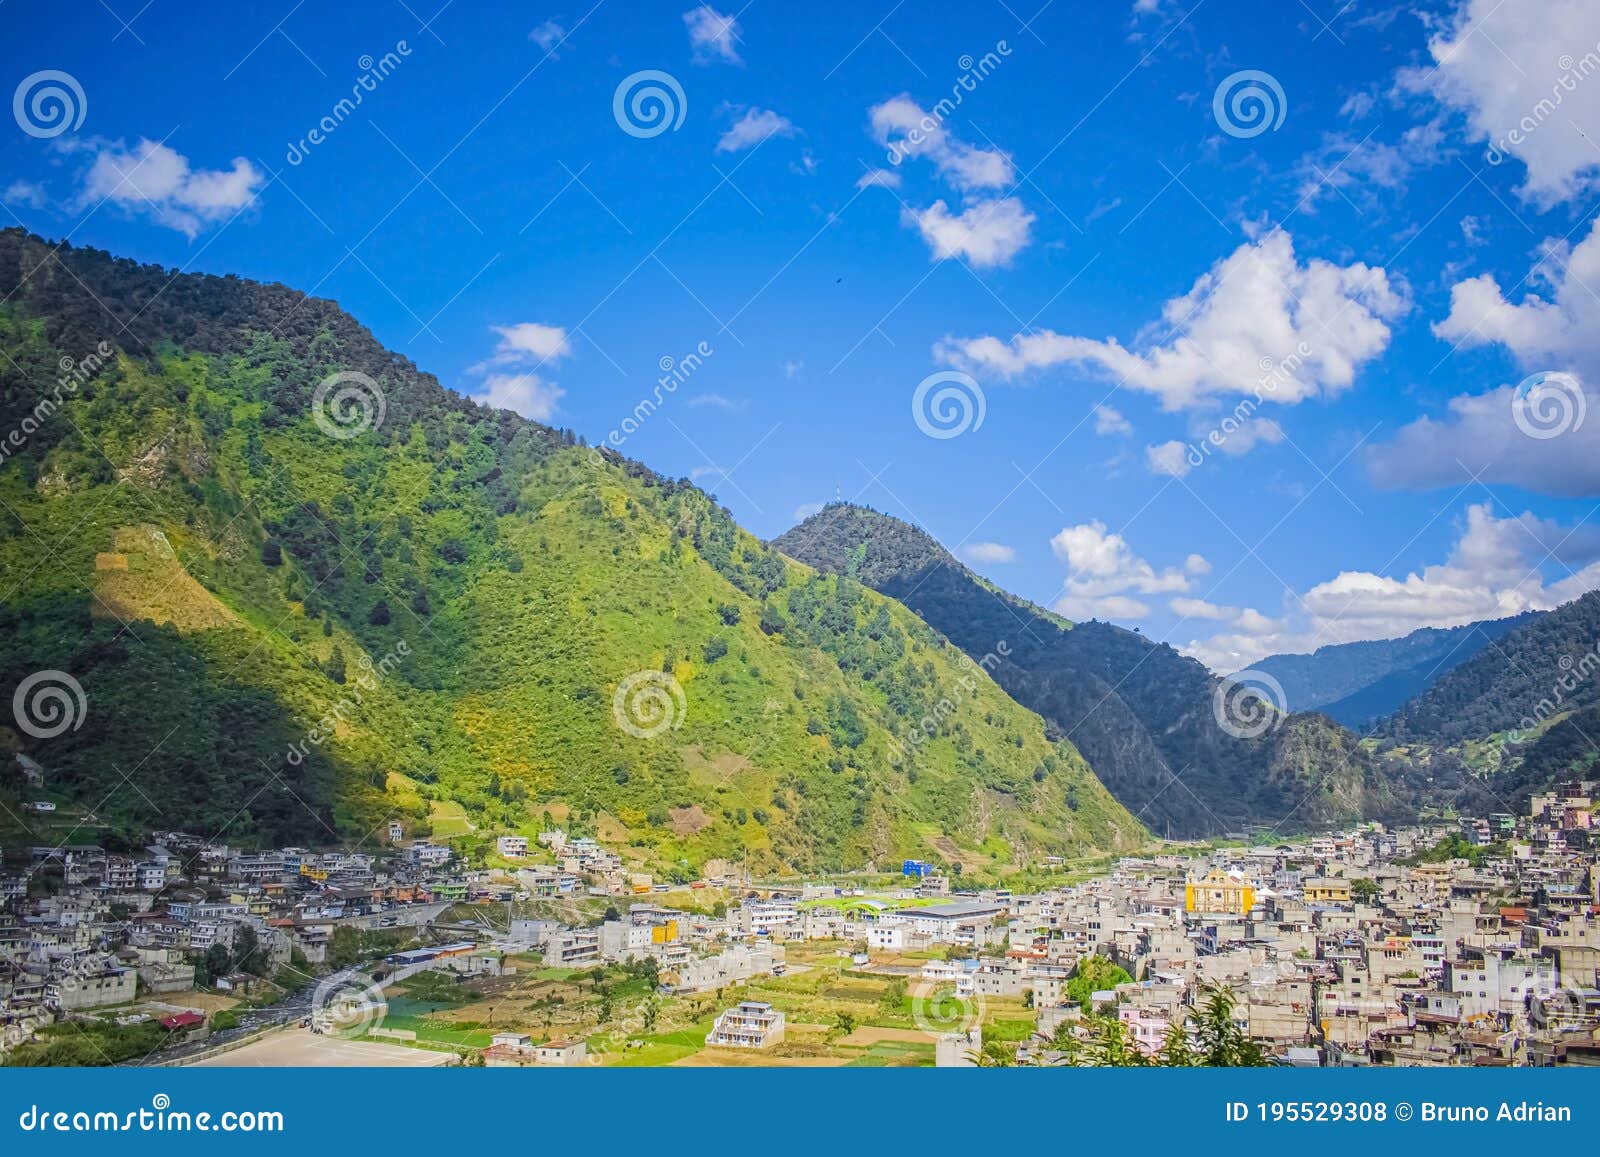 mountains of zunil quetzaltenango, beautiful landscape